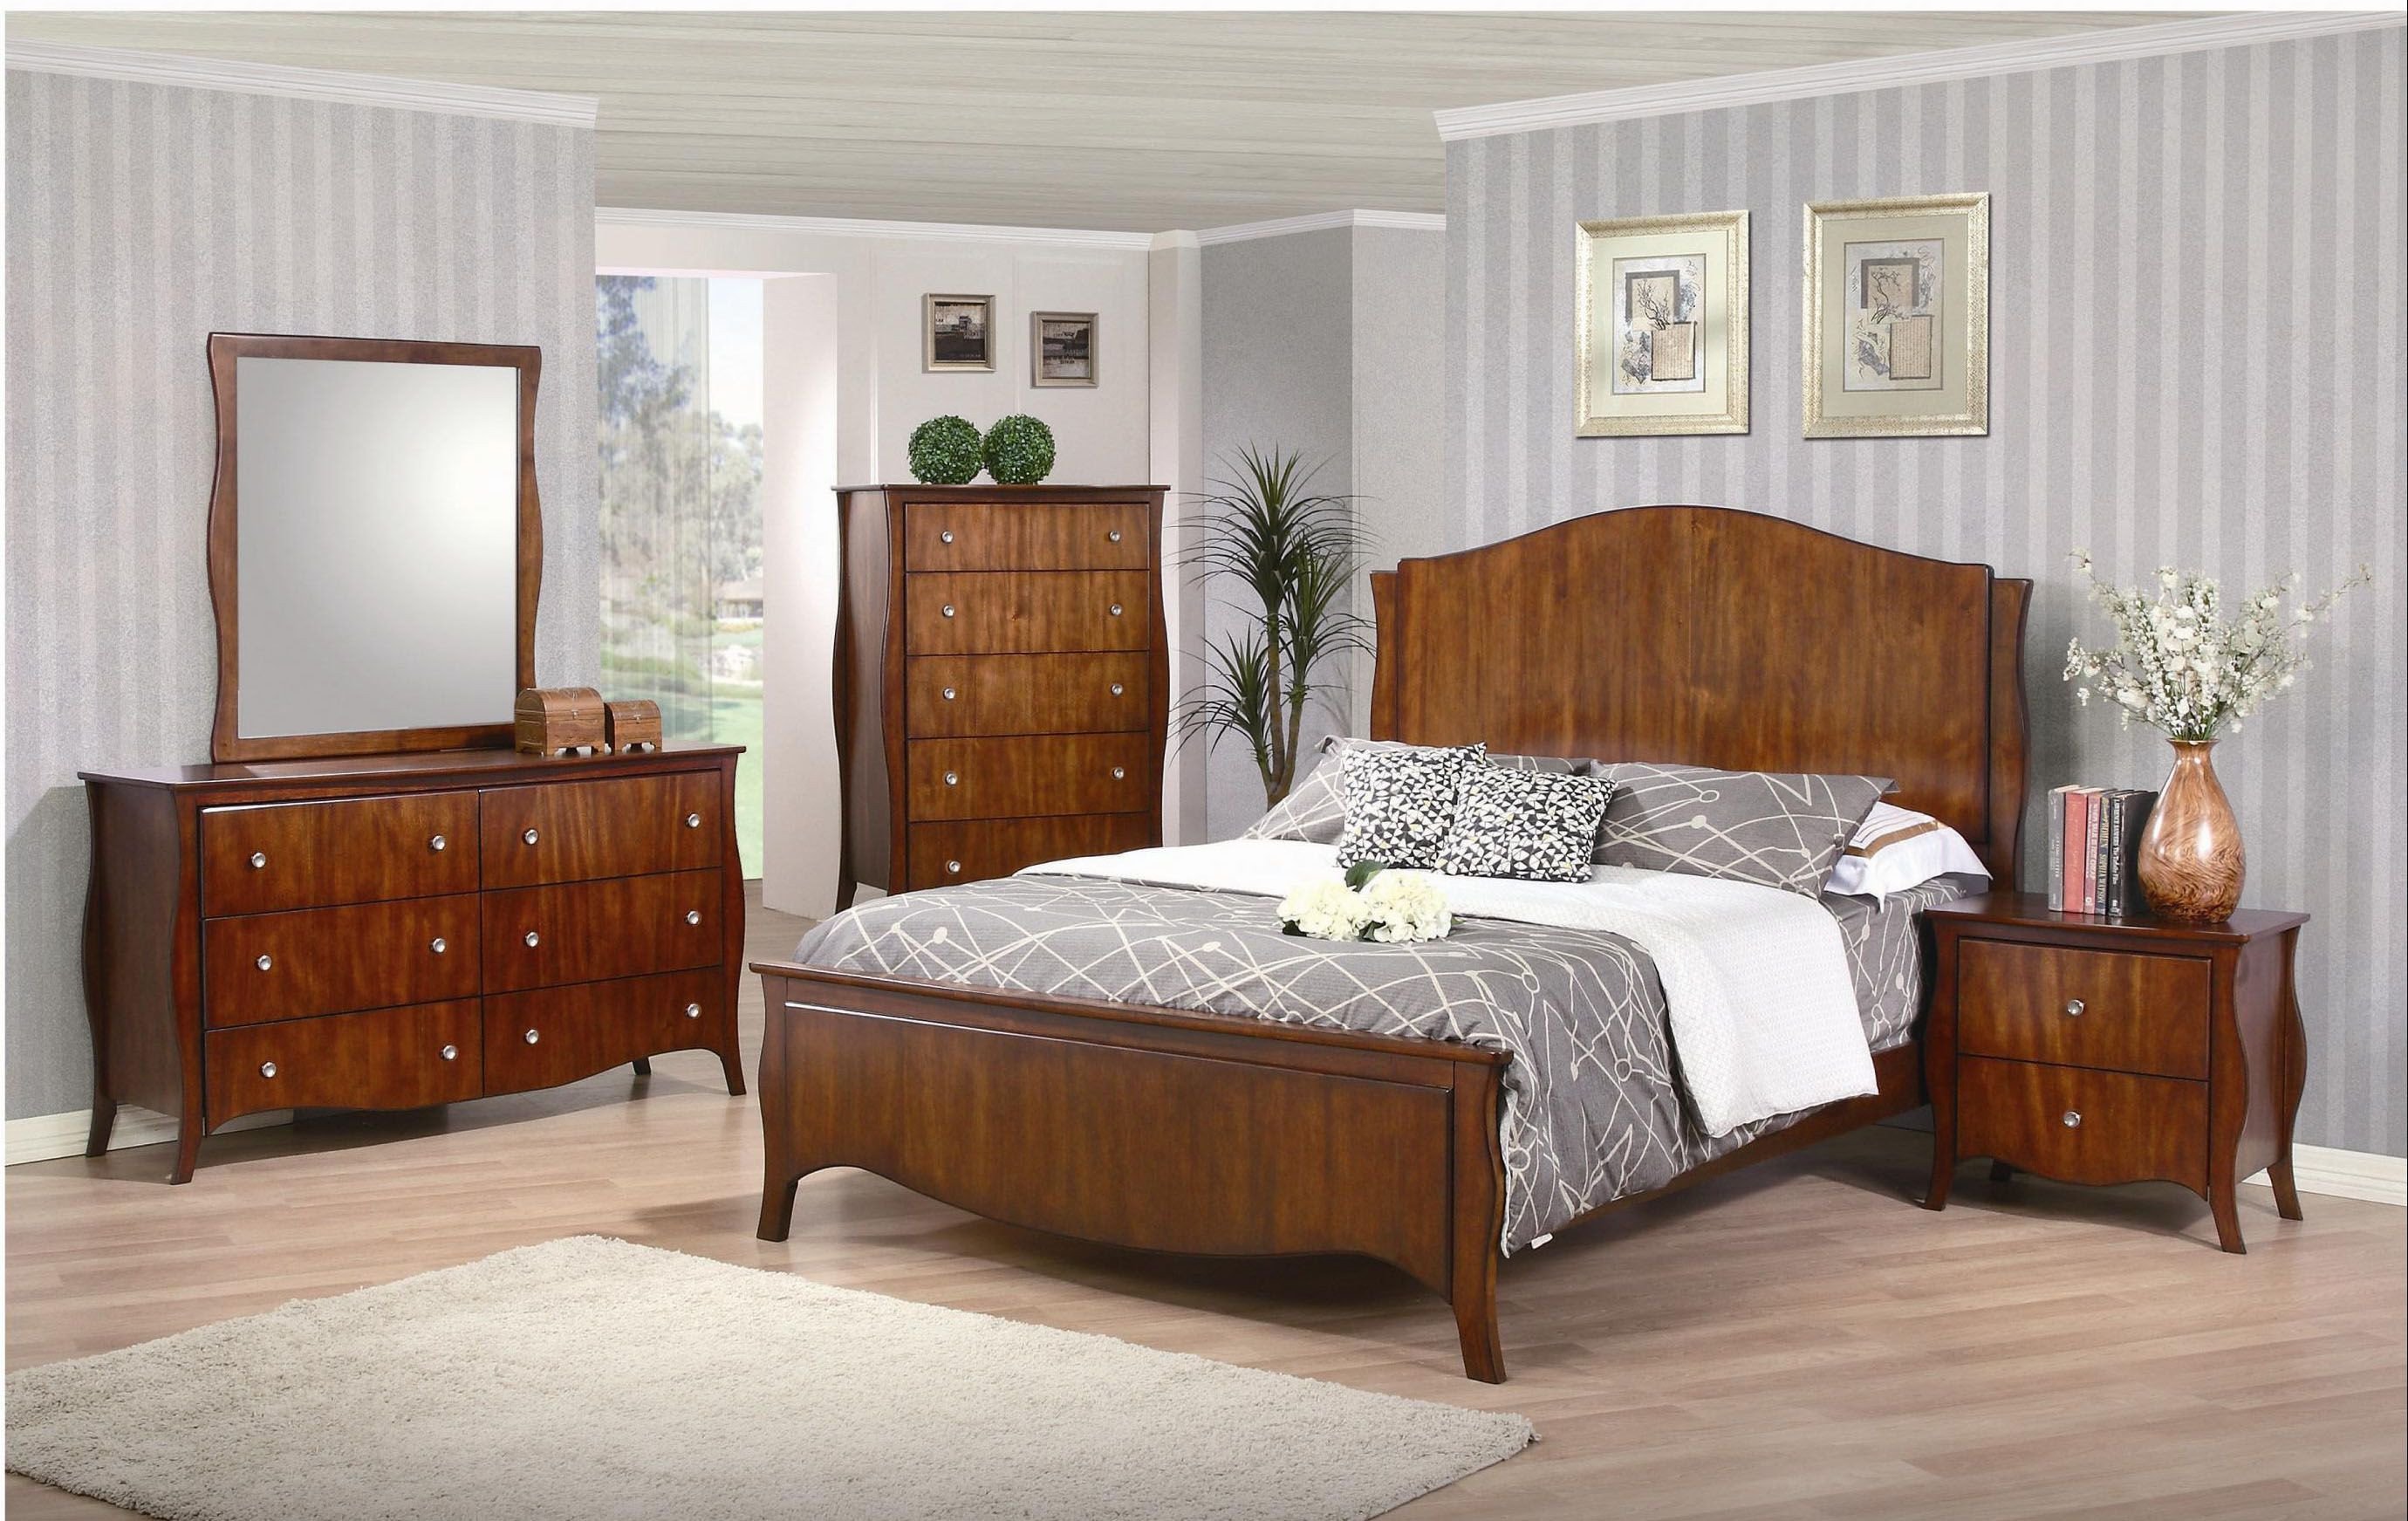 ebay broyhill bedroom furniture